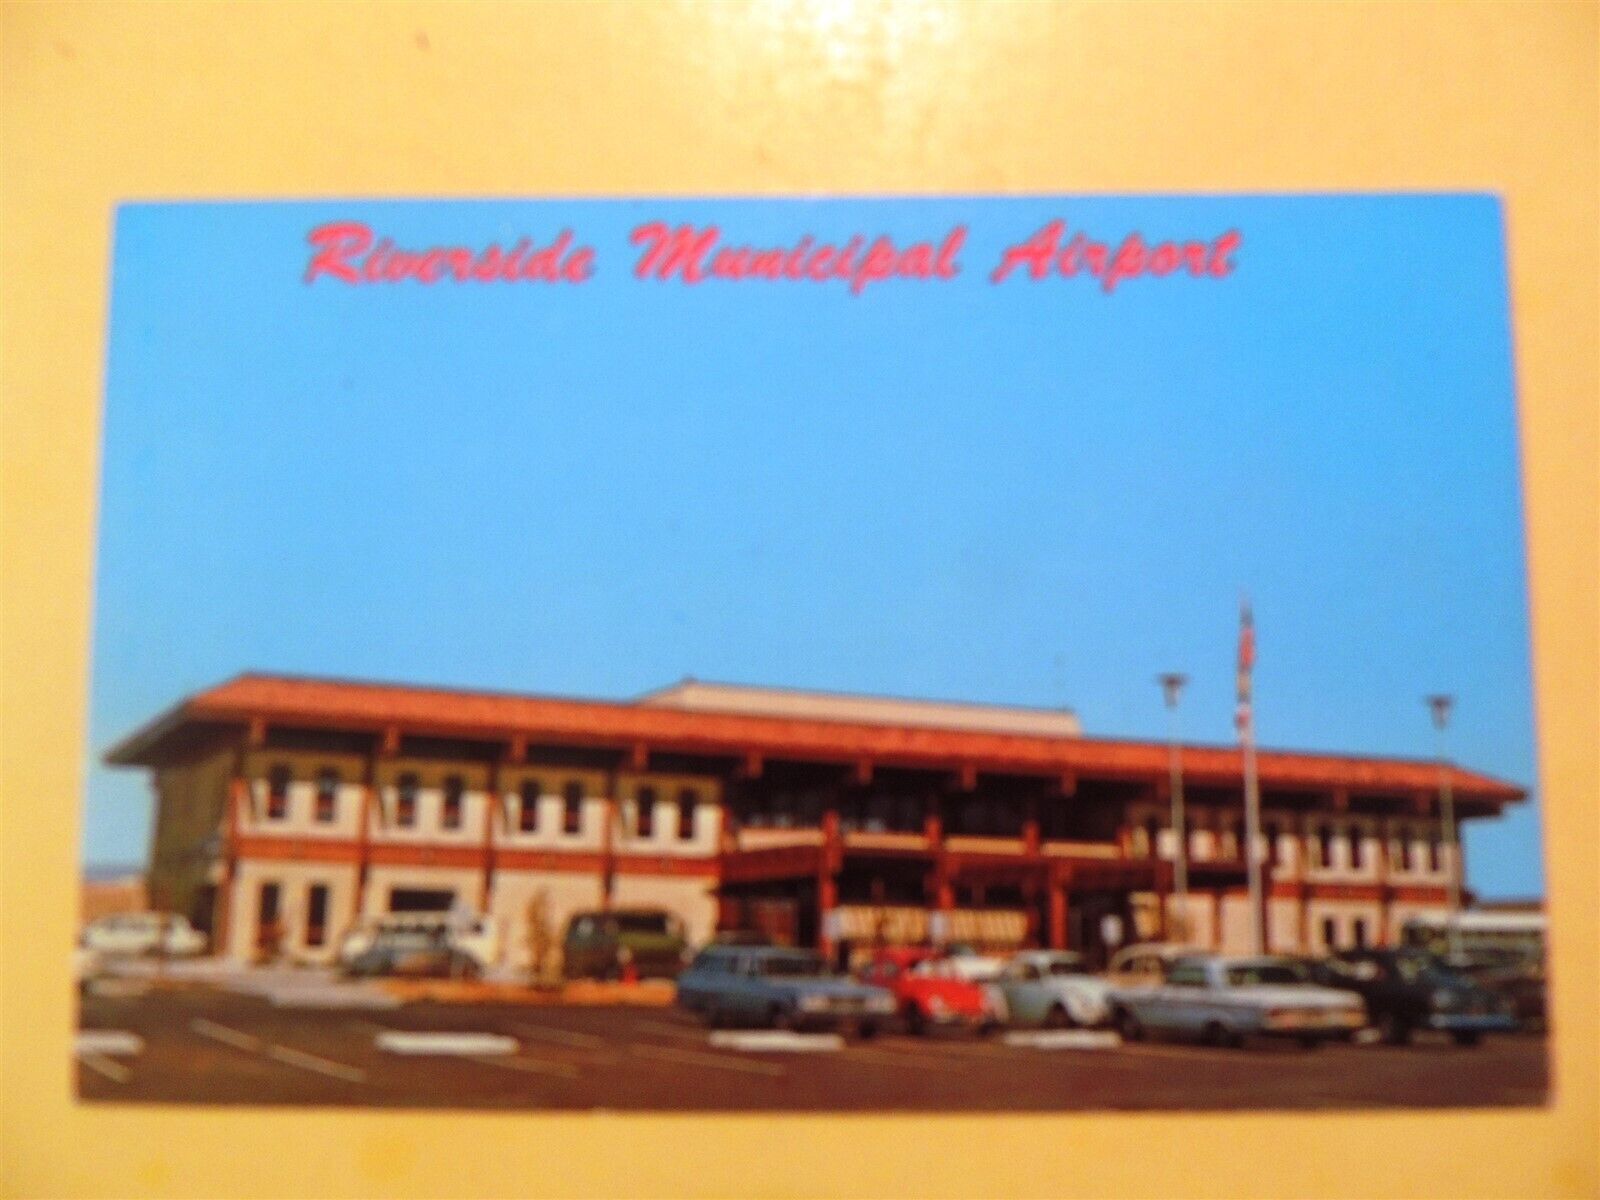 Riverside Municipal Airport Riverside California vintage postcard 